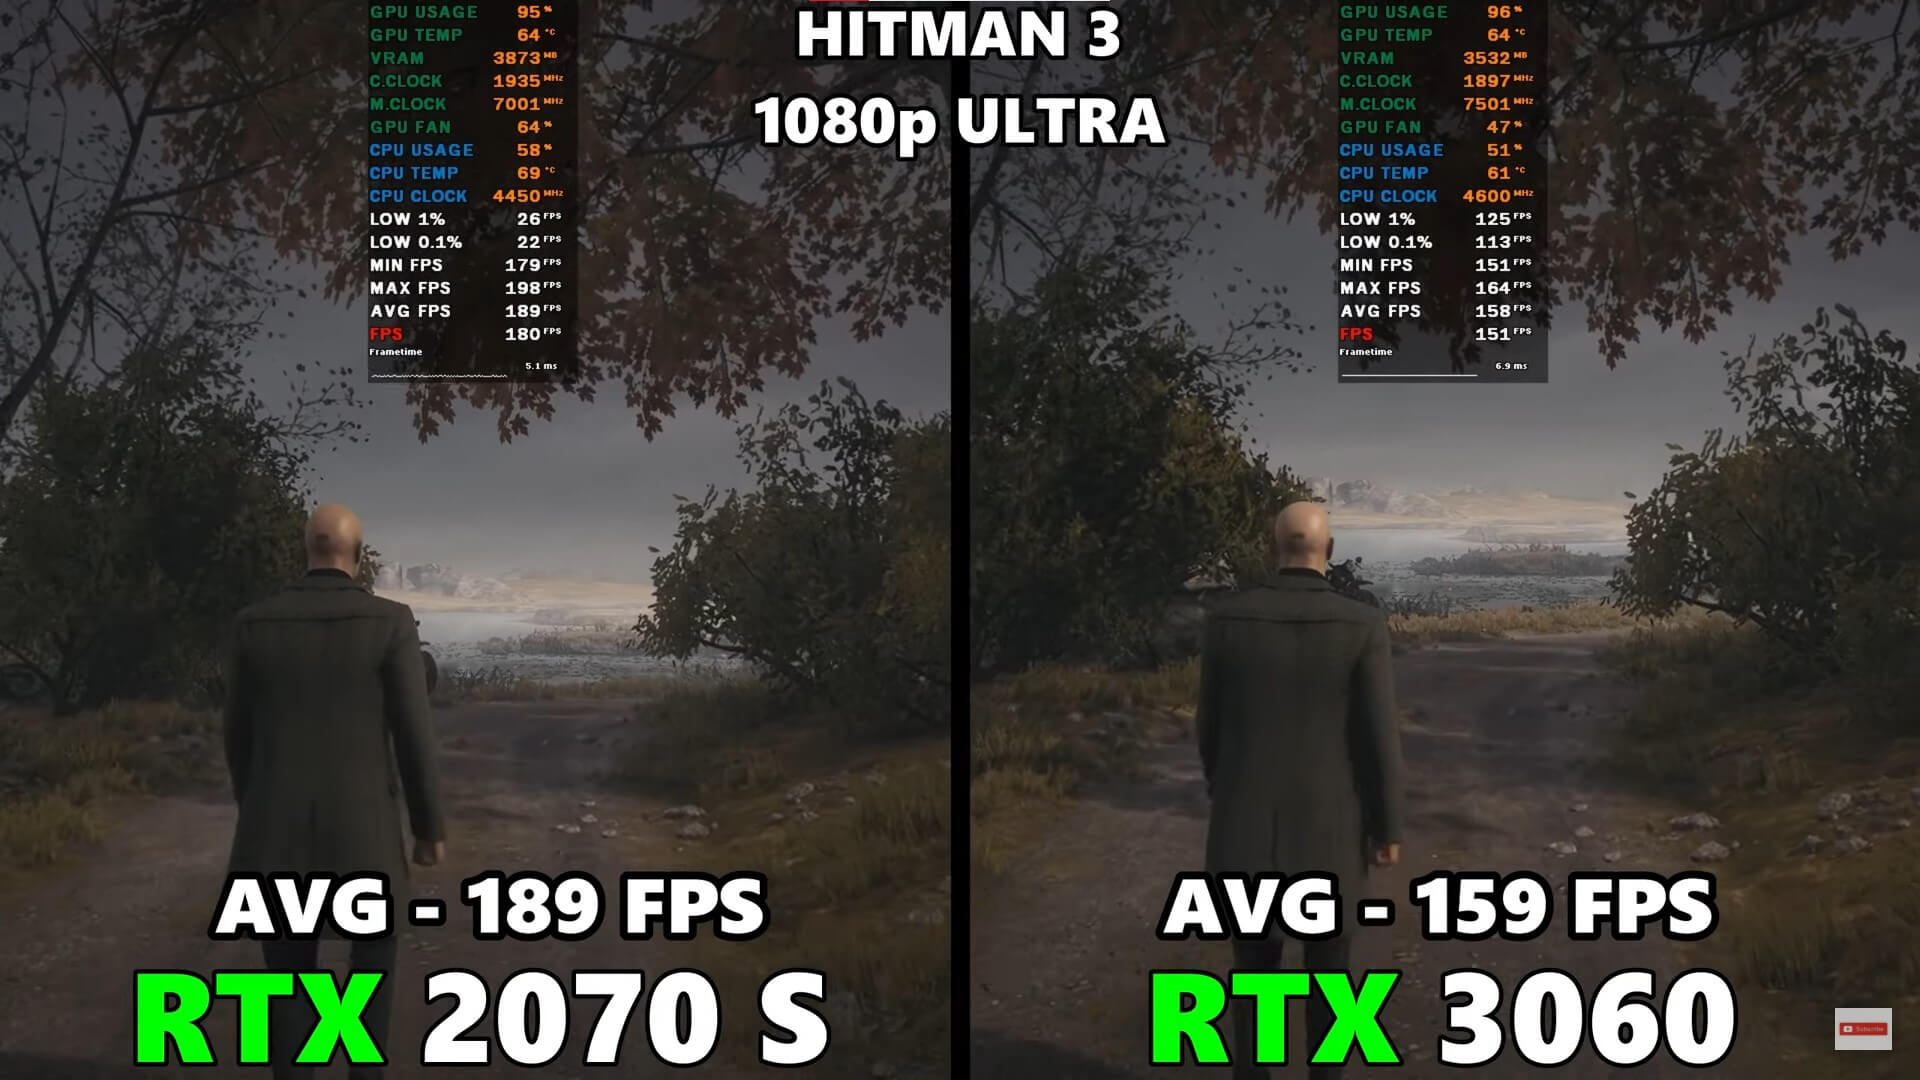 Hitman 3 performance test at 1080P resolution.